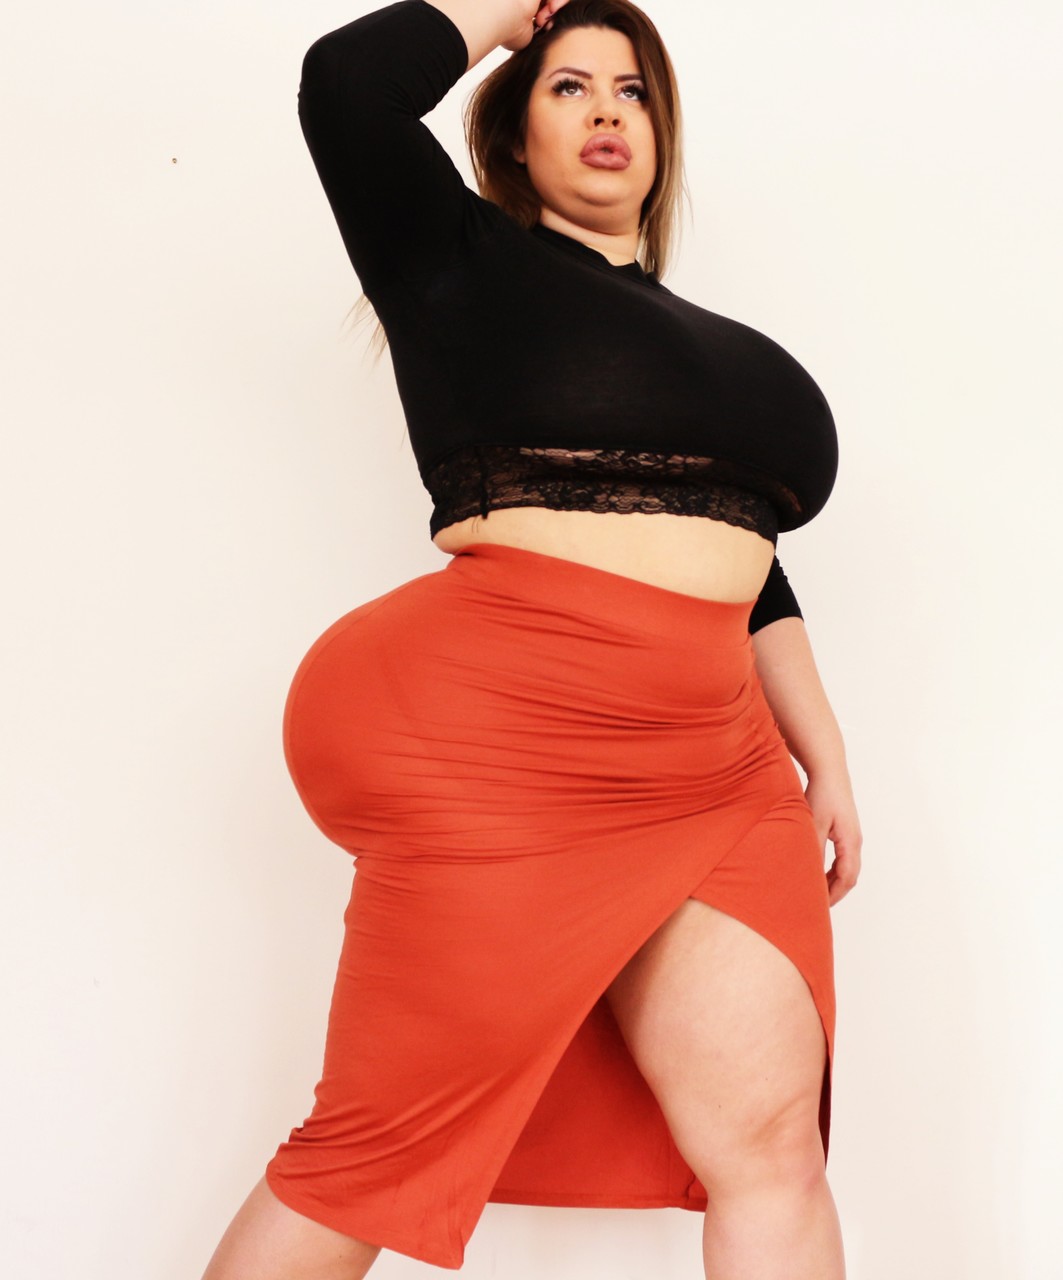 Stunning MILF fatty Natasha Crown flaunting her very big ass in a tight skirt foto porno #423816656 | Natasha Crown Pics, Natasha Crown, BBW, porno ponsel